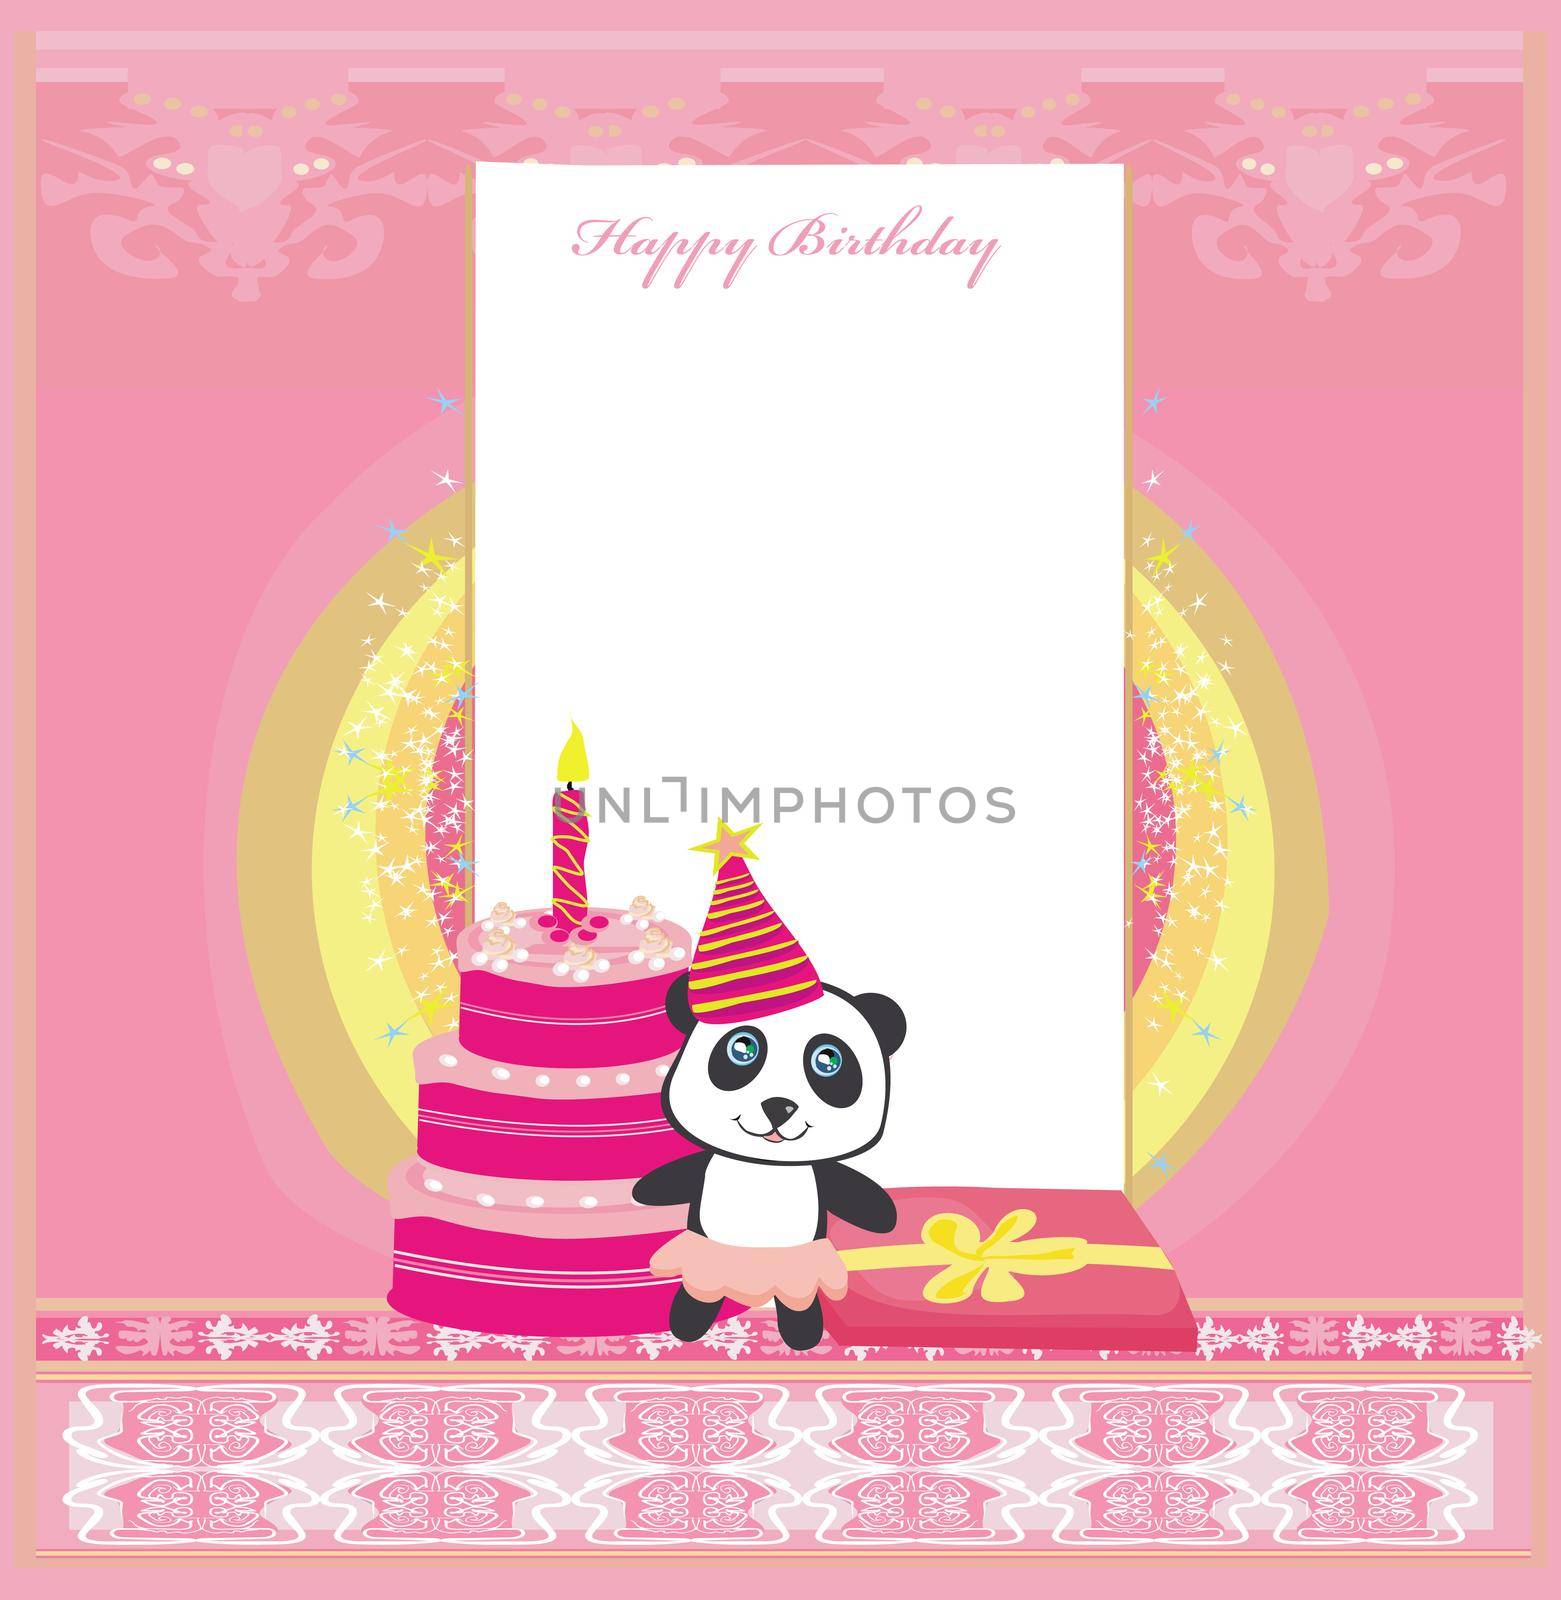 Happy Birthday Card, girlish invitation with cute panda by JackyBrown